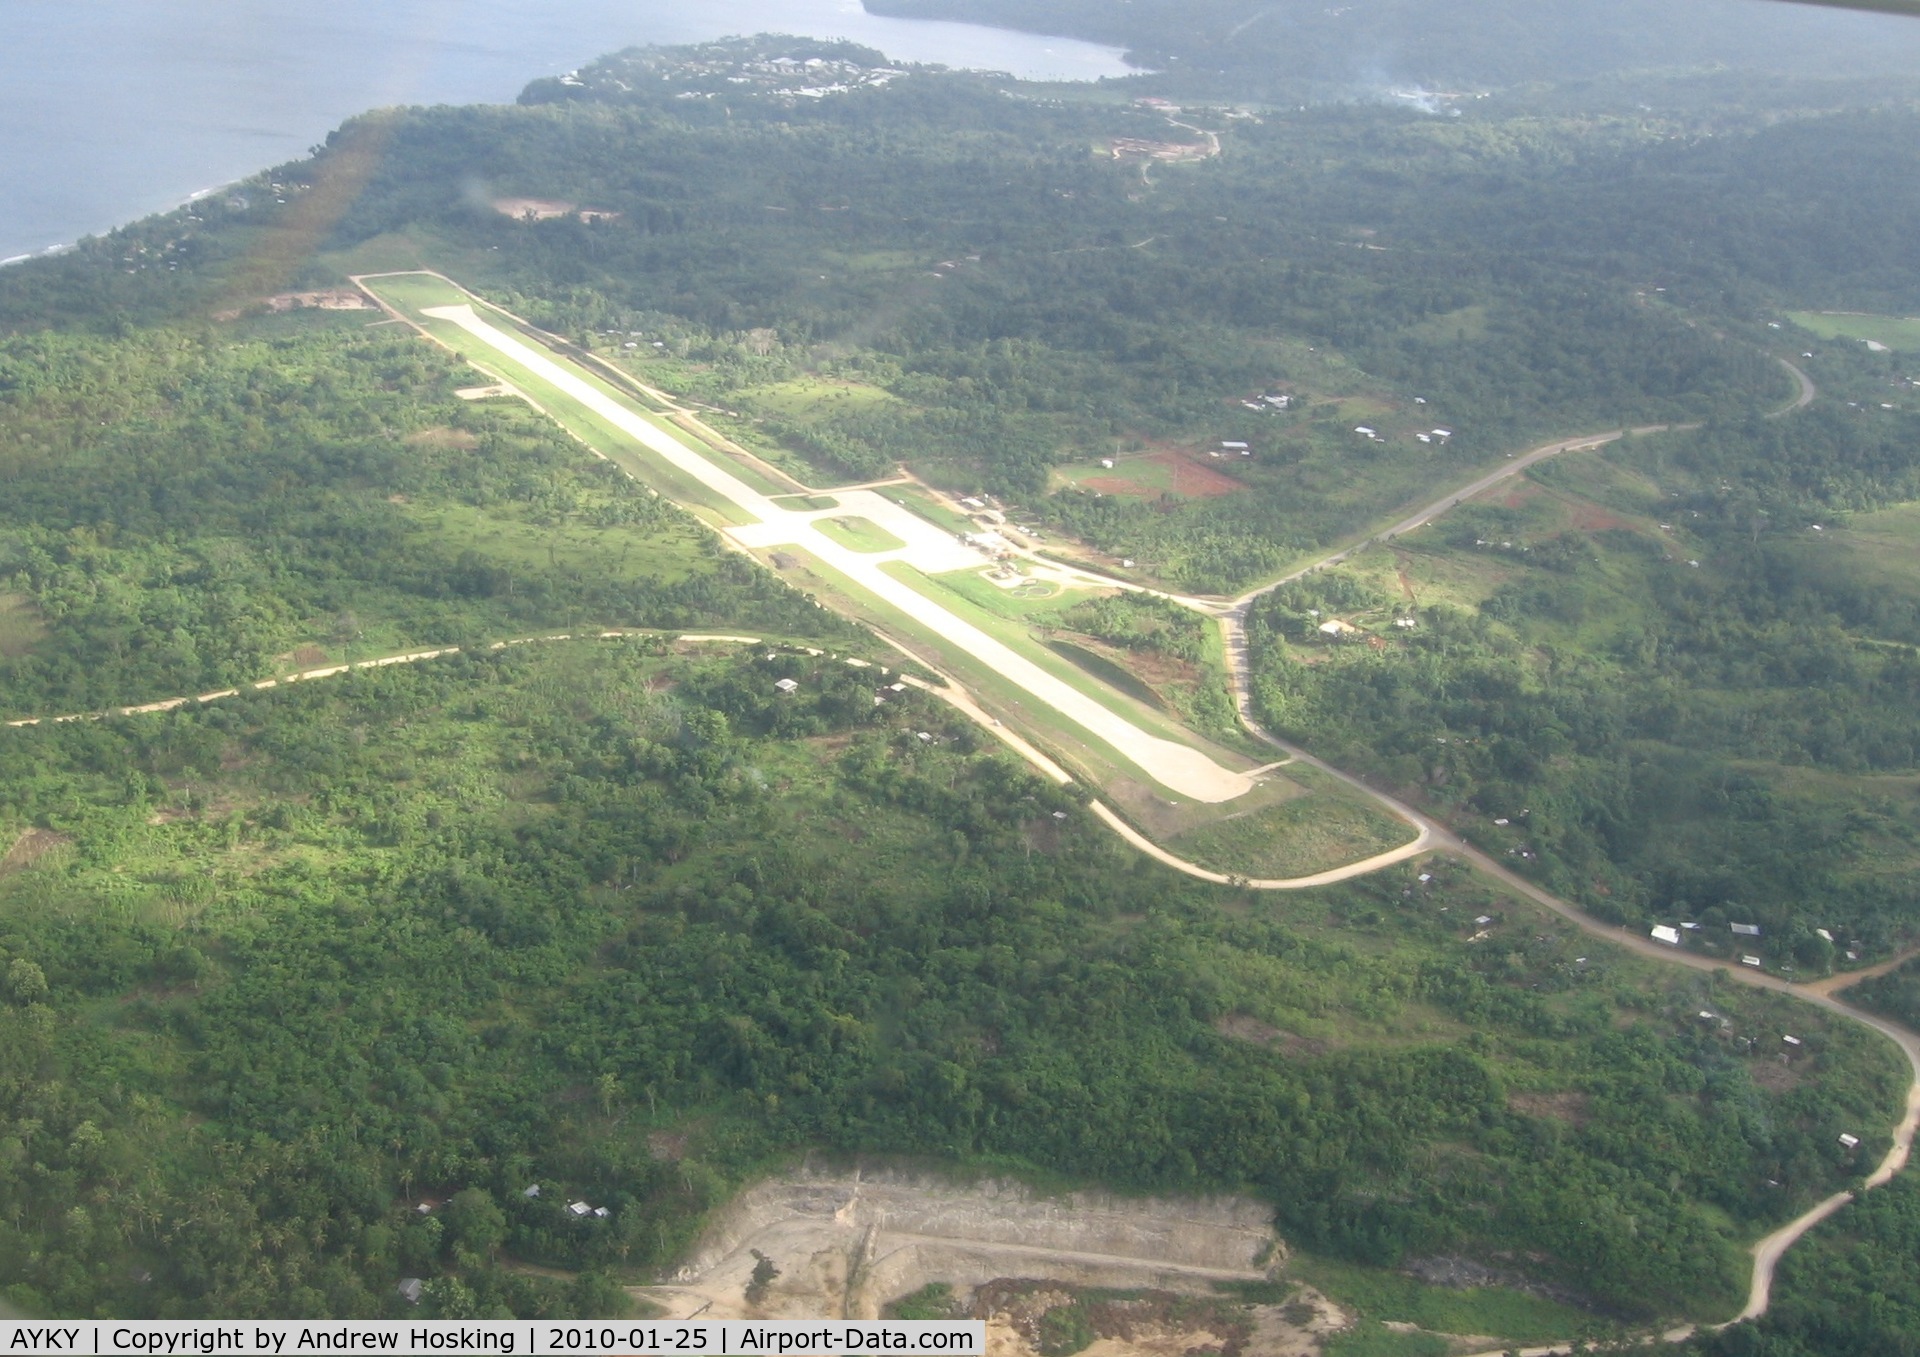 Kunaye Airport, Kunaye Papua New Guinea (AYKY) - Looking south